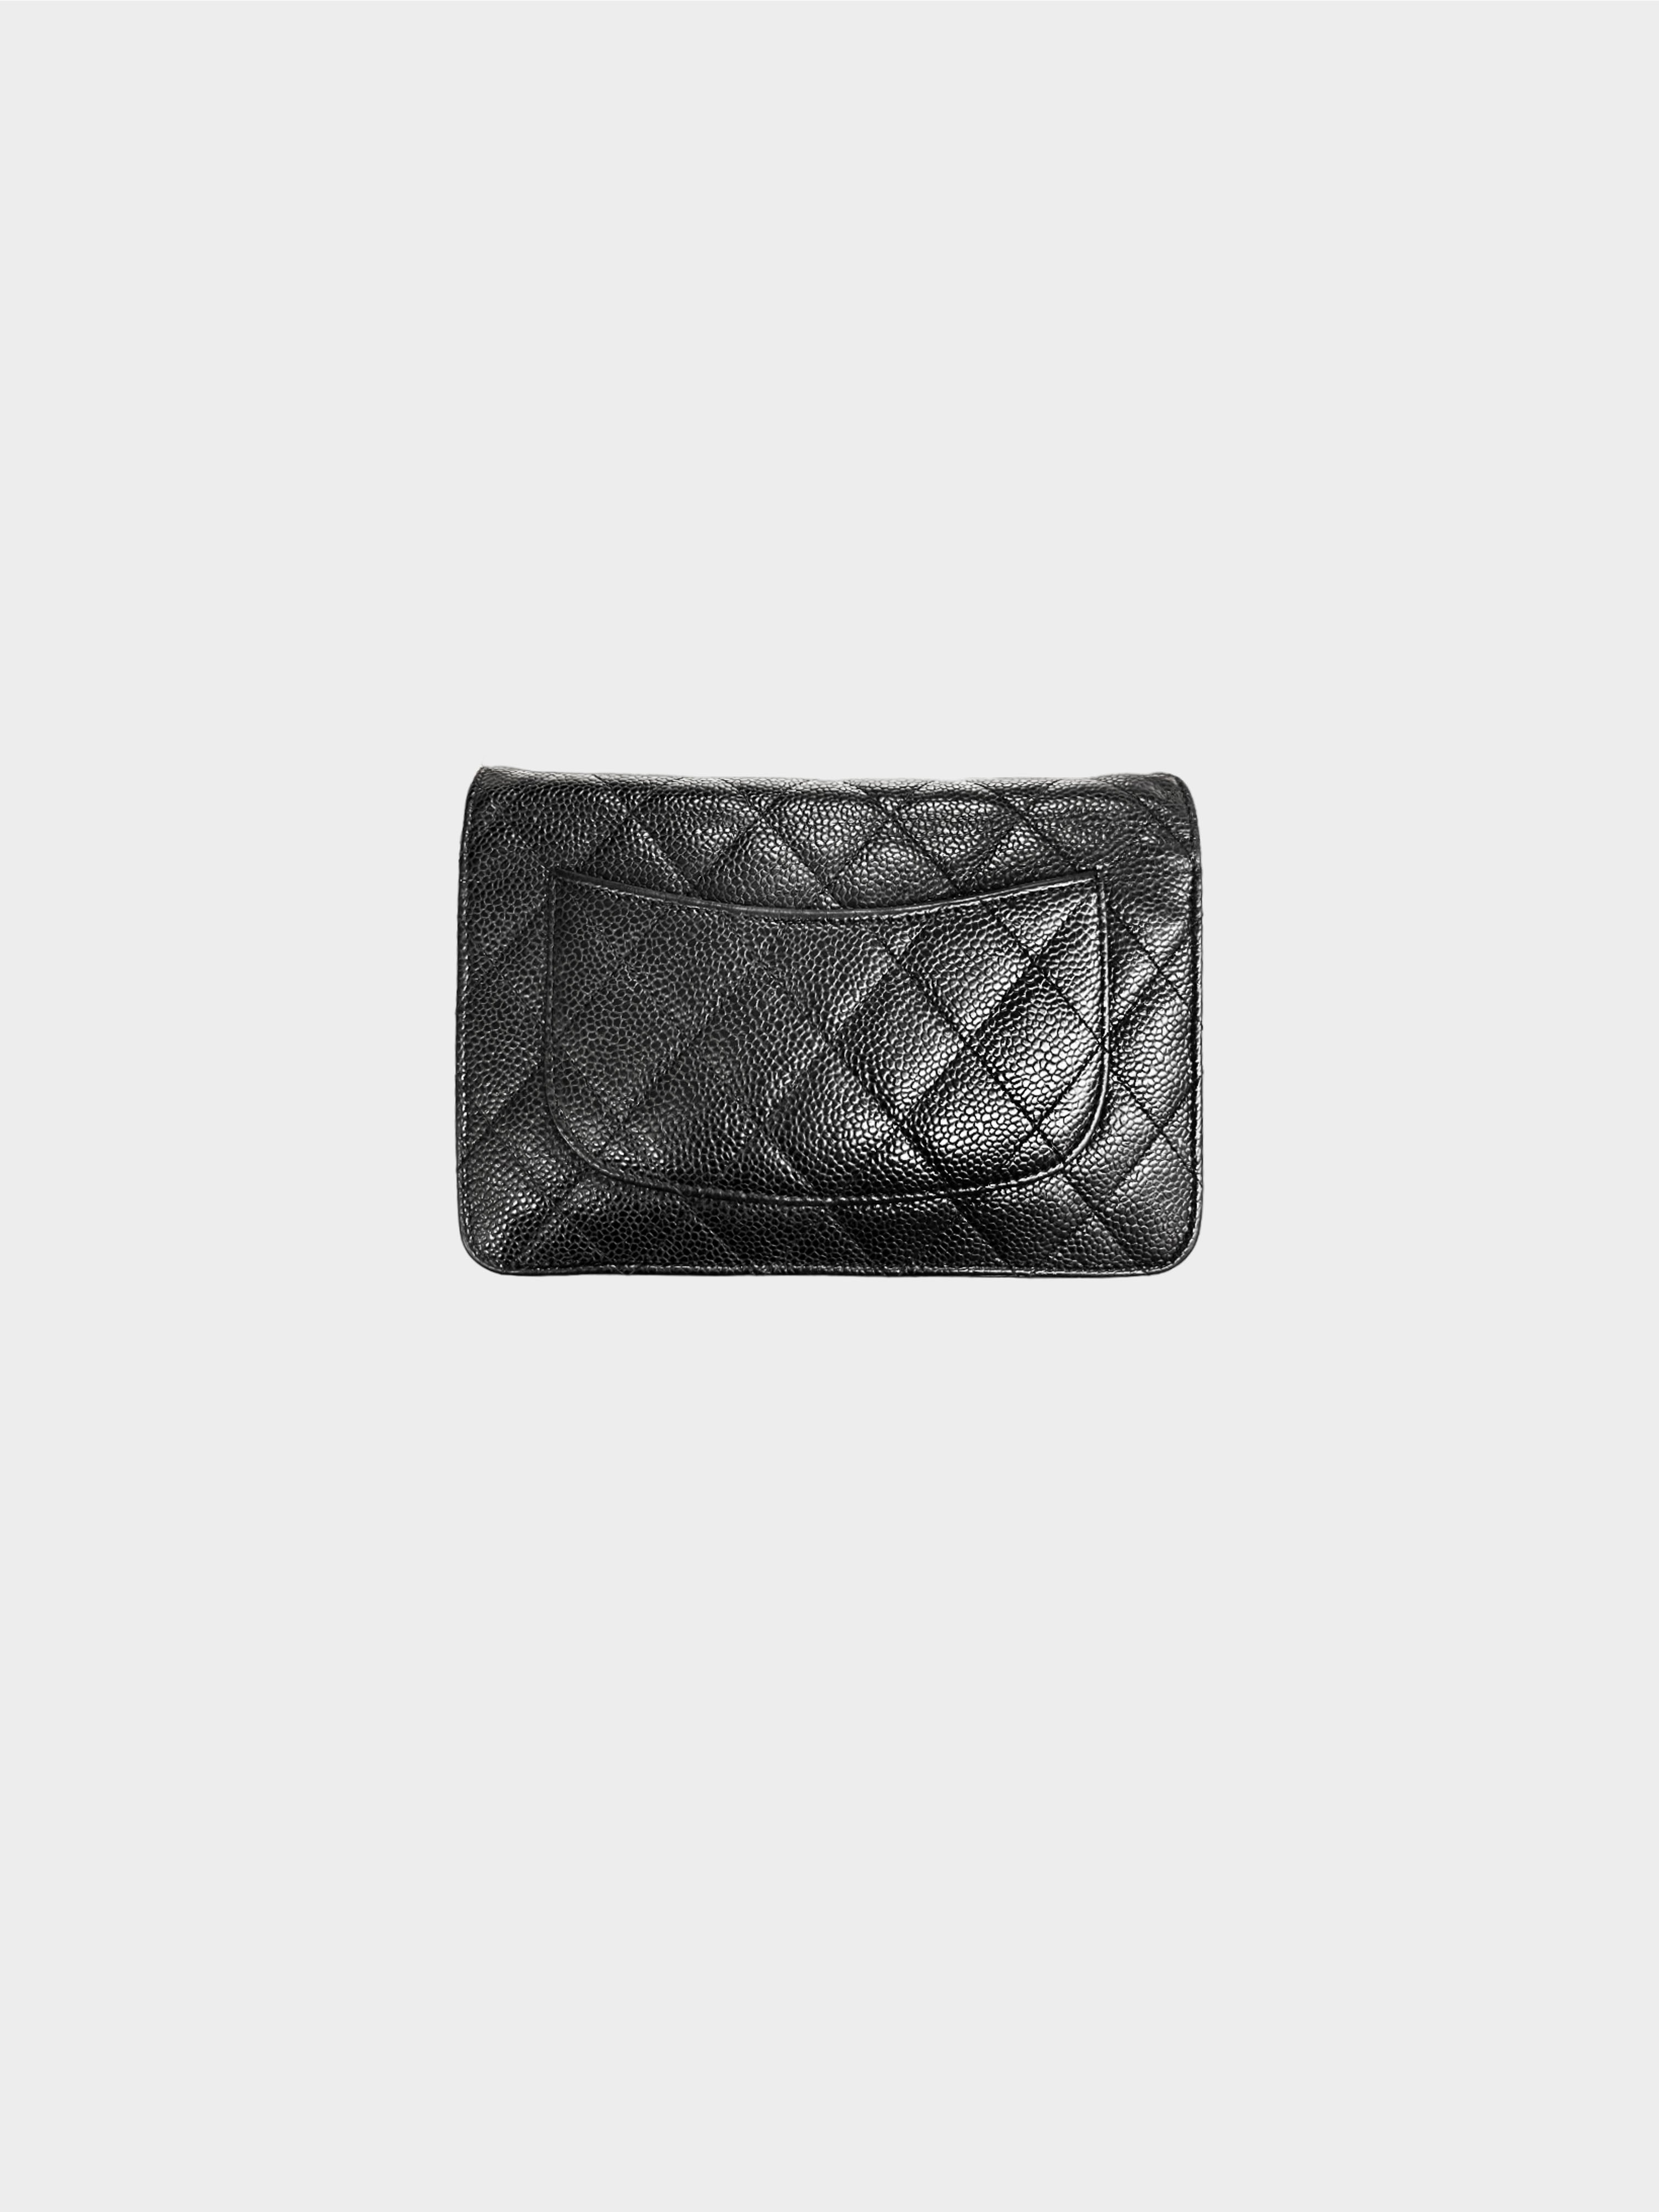 Chanel 2014 Black Caviar Wallet on Chain